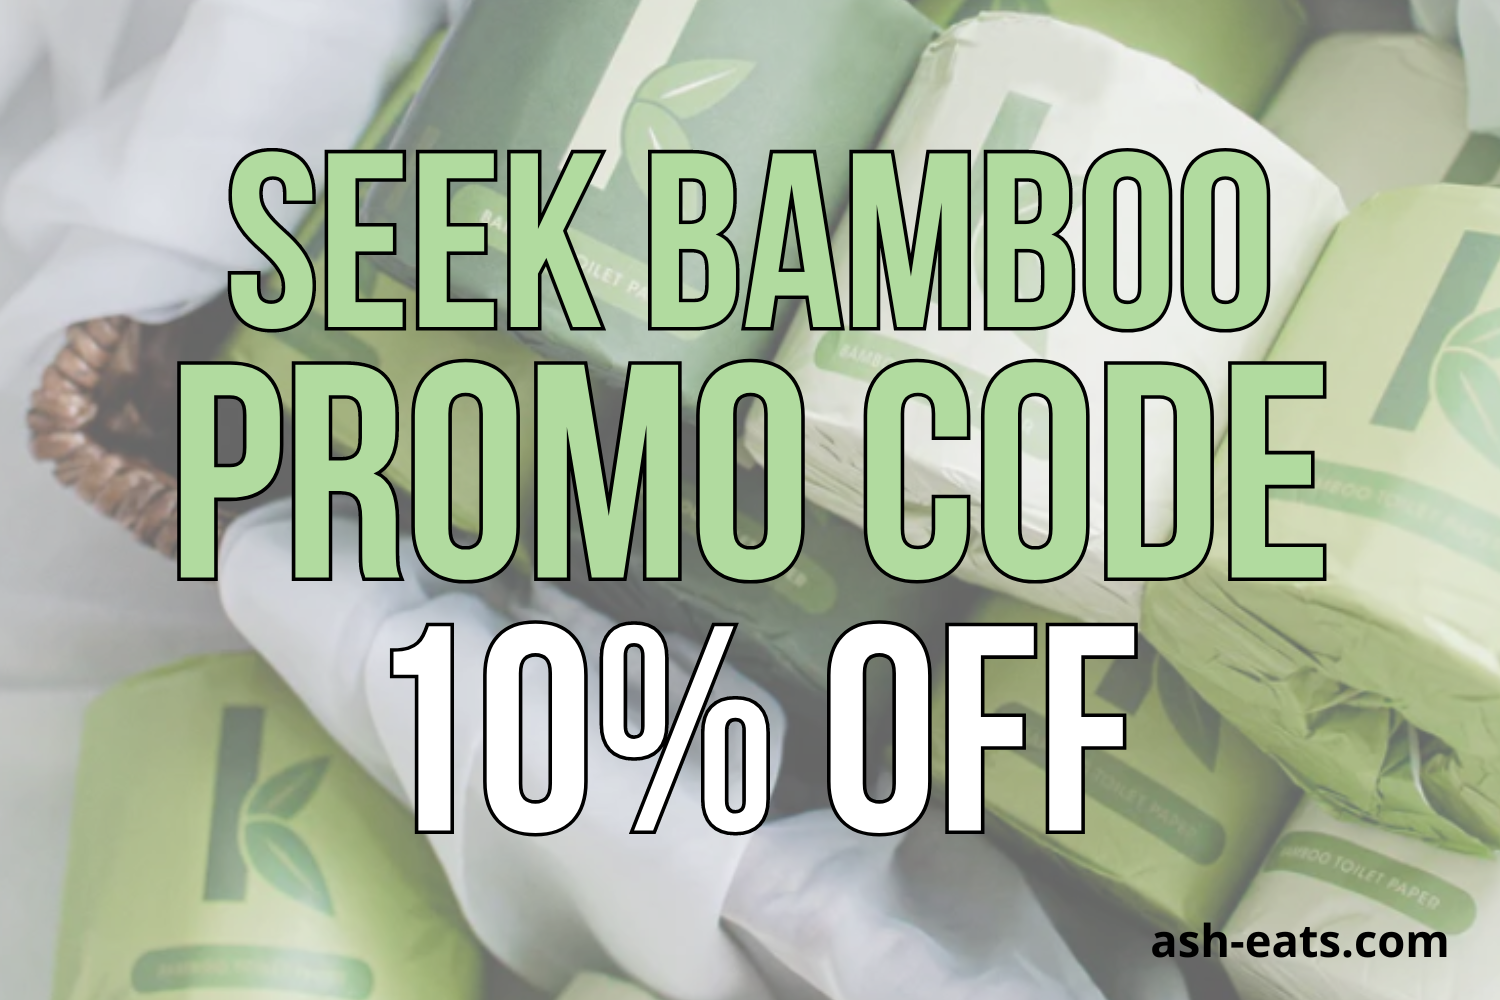 seek bamboo promo code